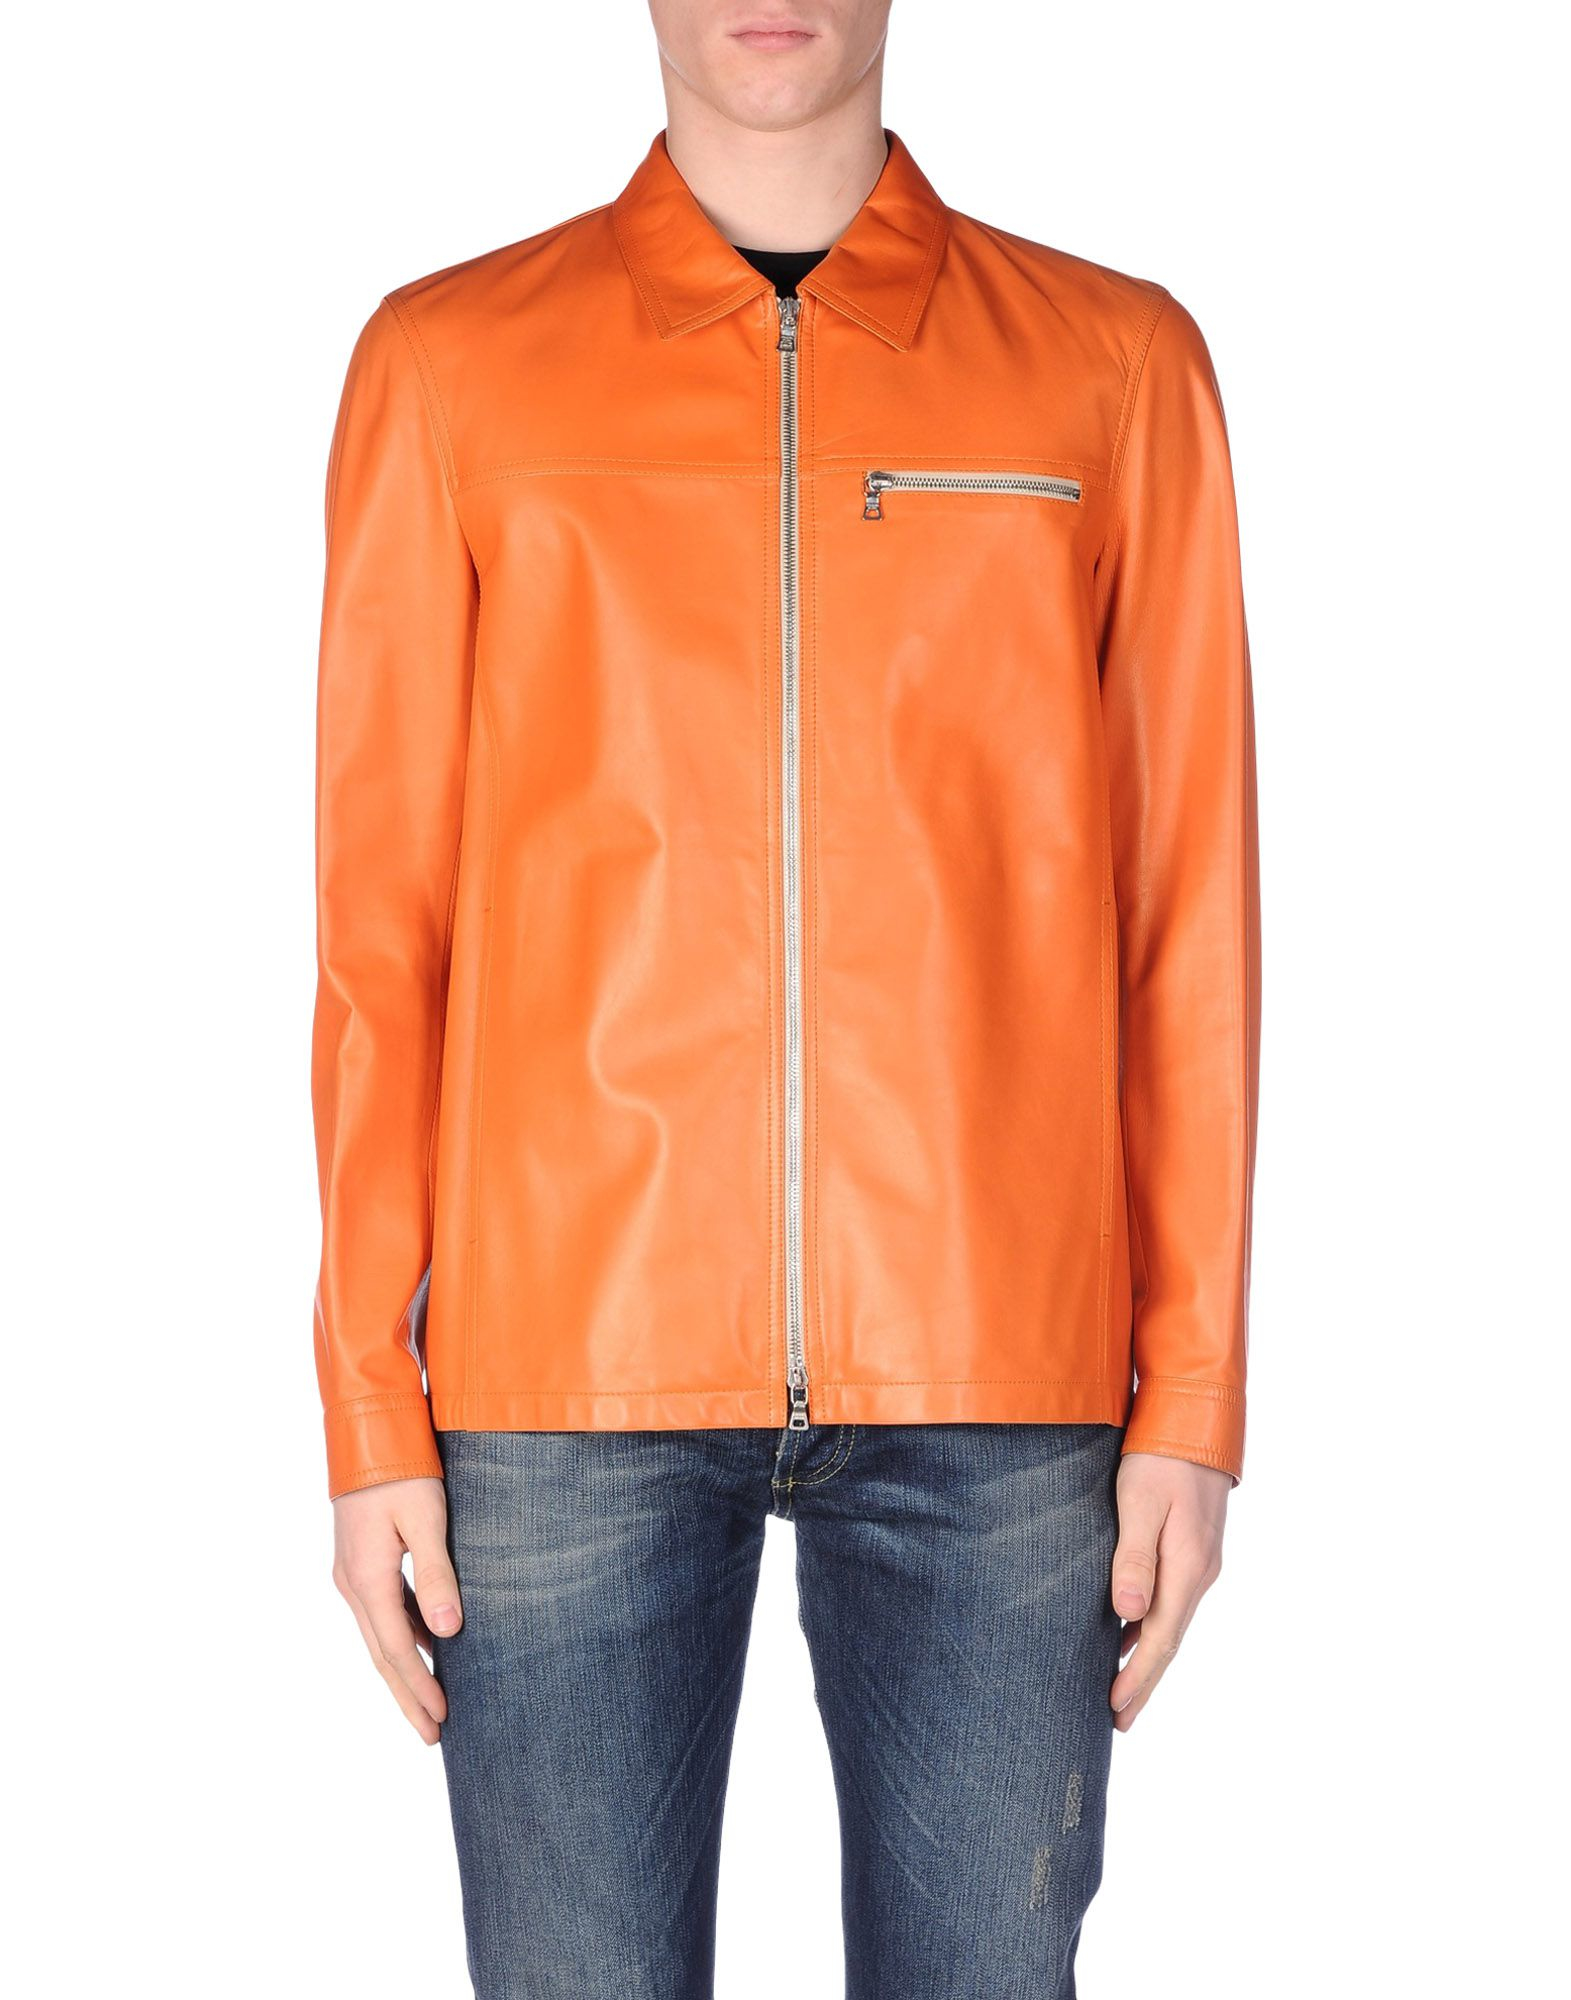 Prada Jacket in Orange for Men - Lyst